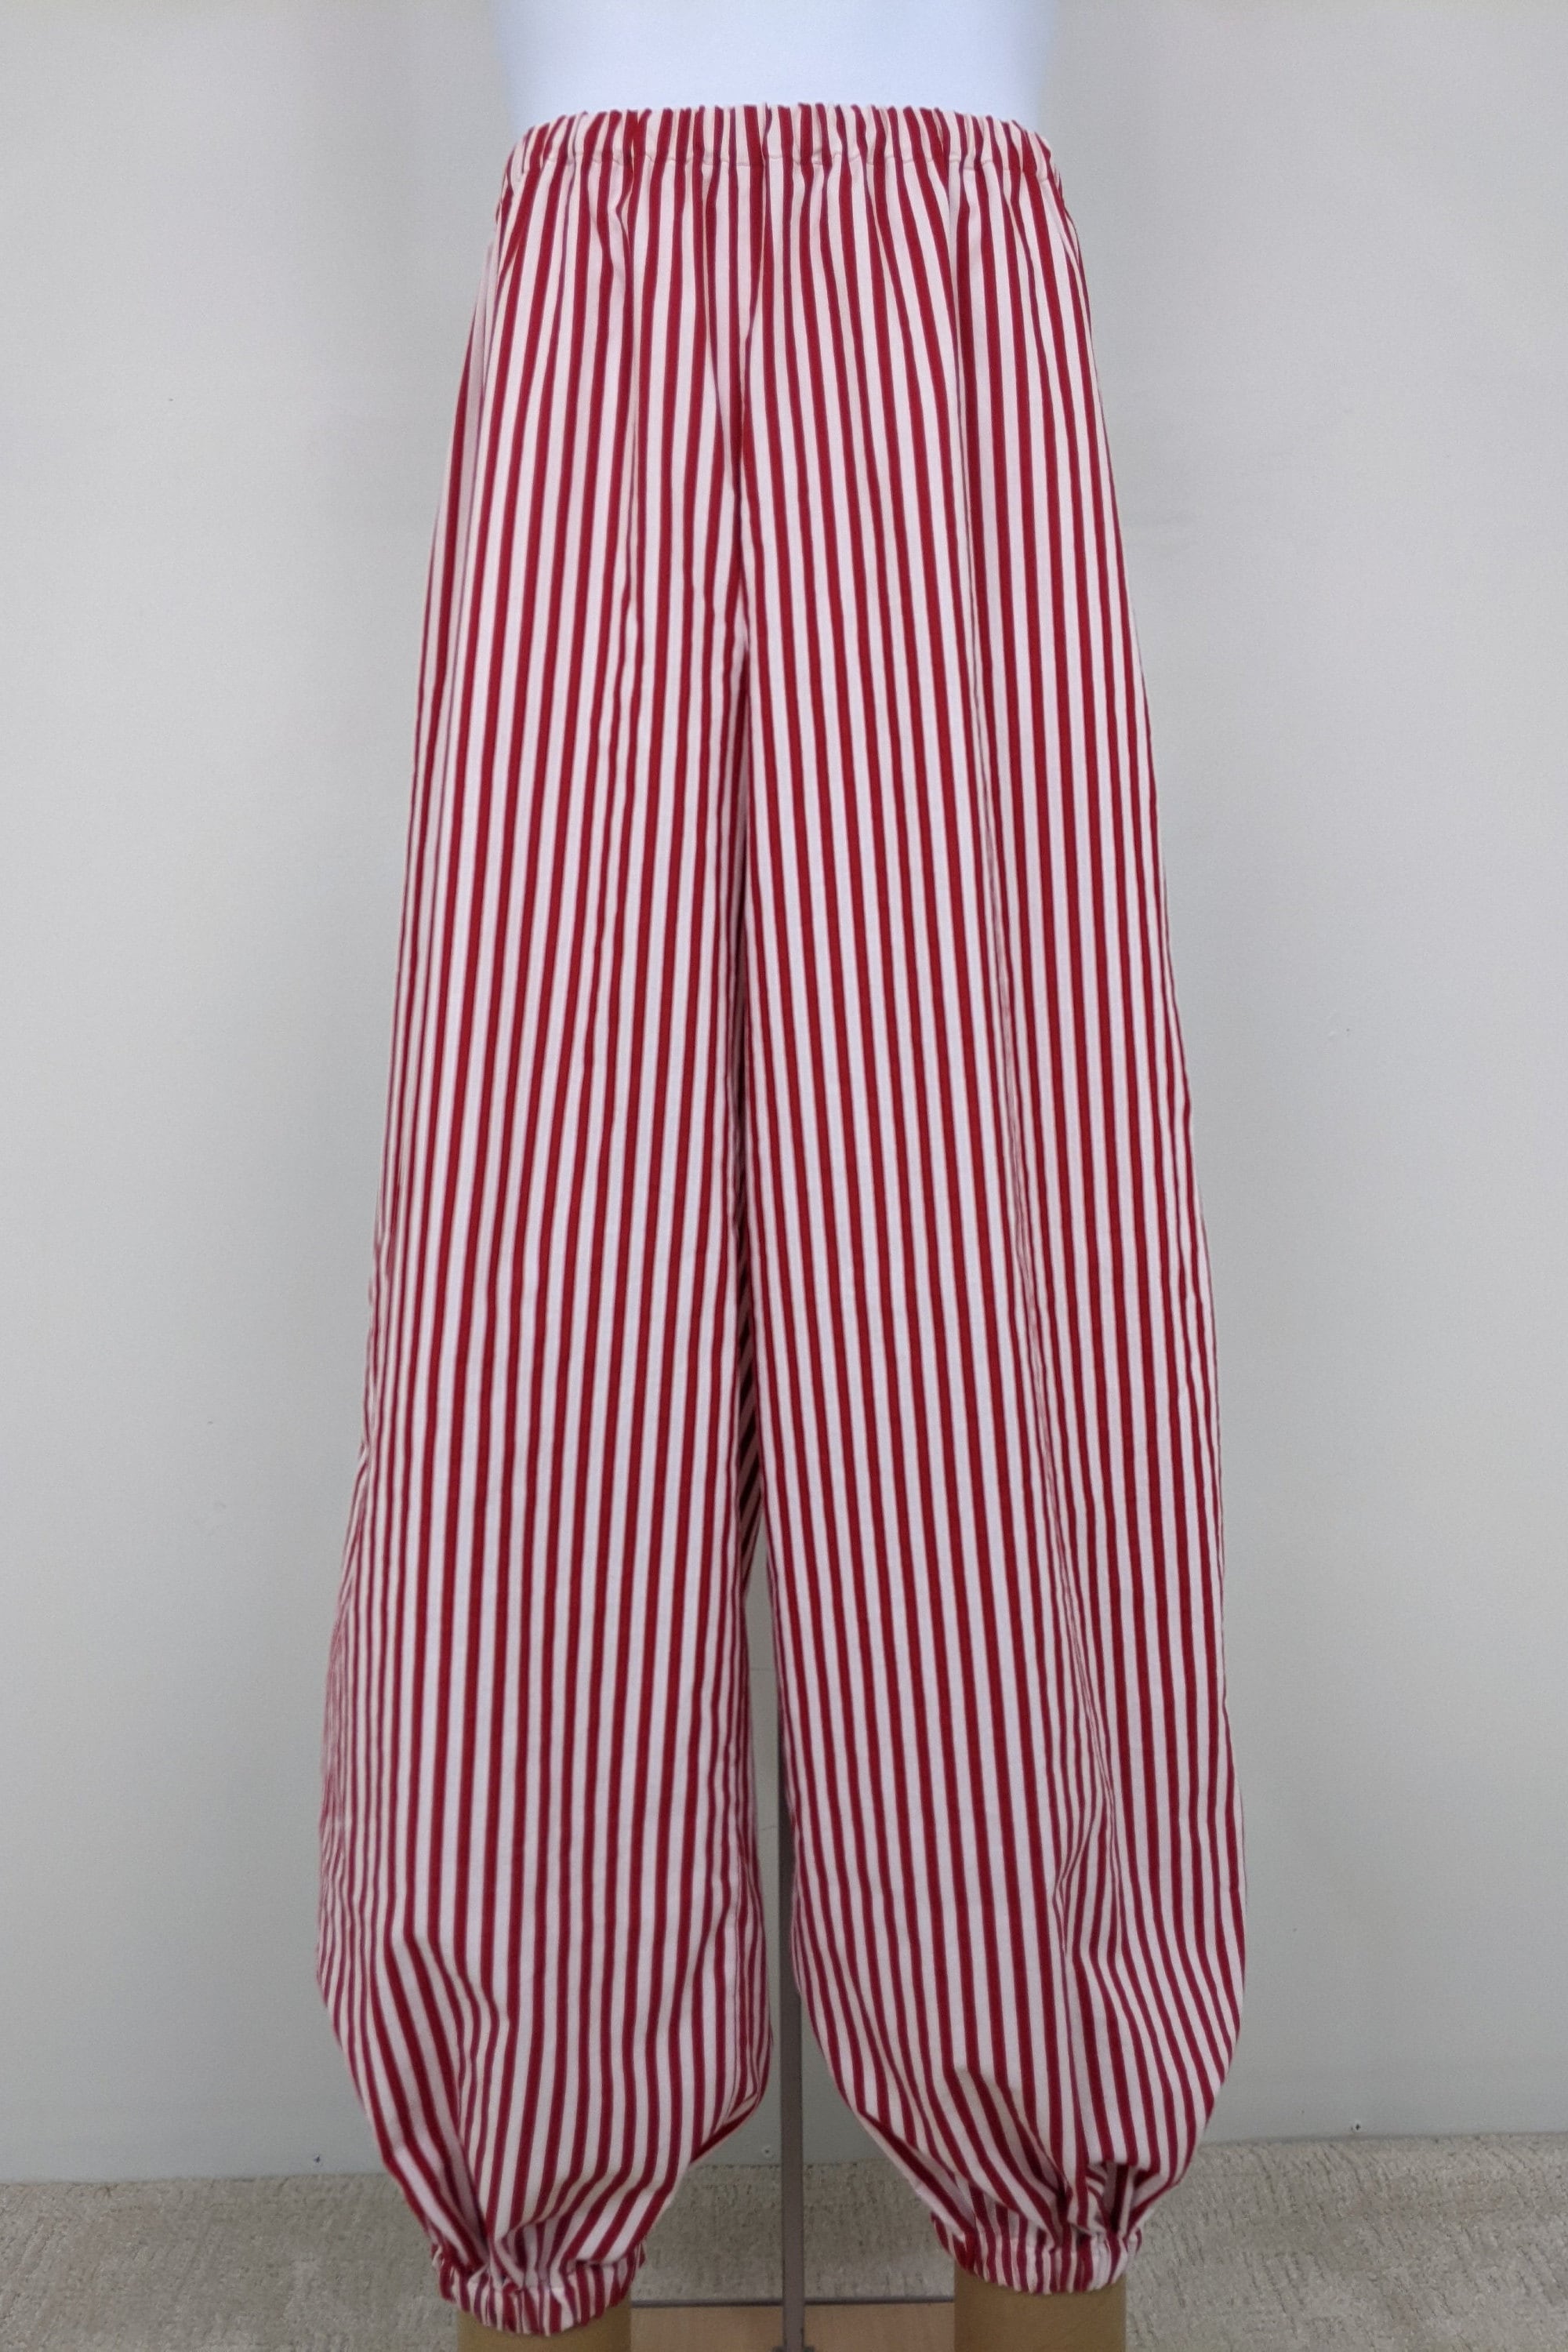 Striped Pants Red And White Hotsell  dainikhitnewscom 1692269719